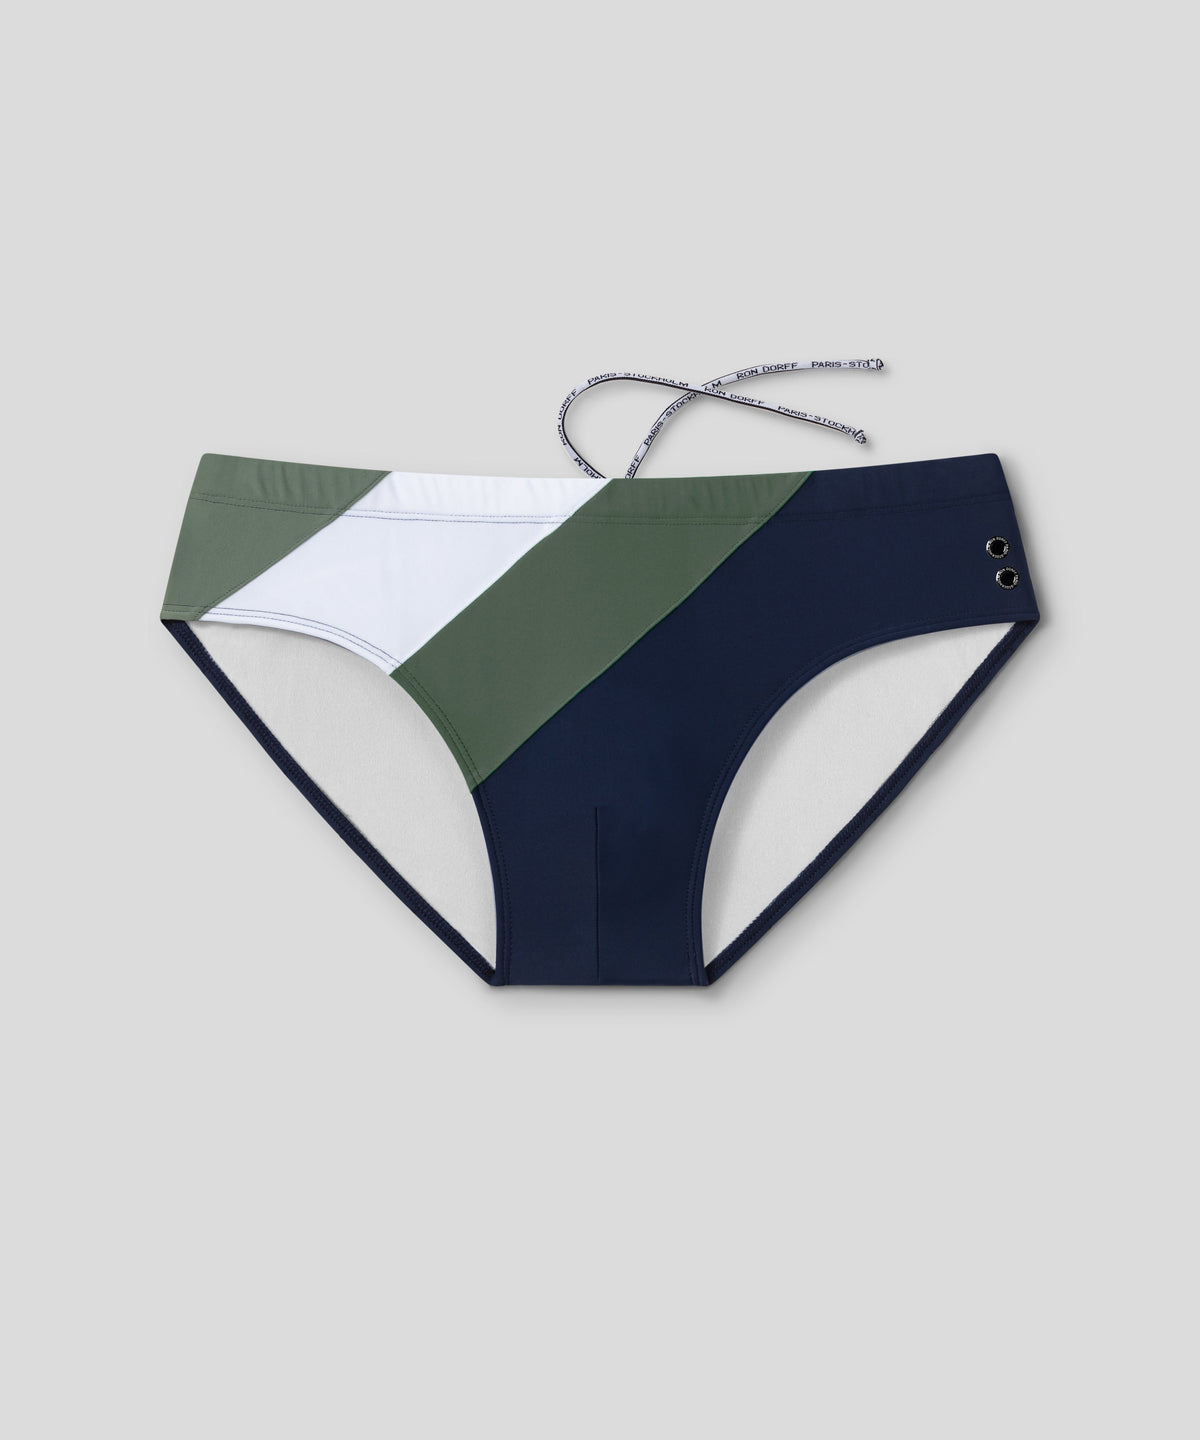 RON DORFF - Ignacio in RD striped swim briefs. Find the collection:   #RonDorff #Menswear #Swimwear #IgnacioOndategui  @ignacioondategui @smiggi